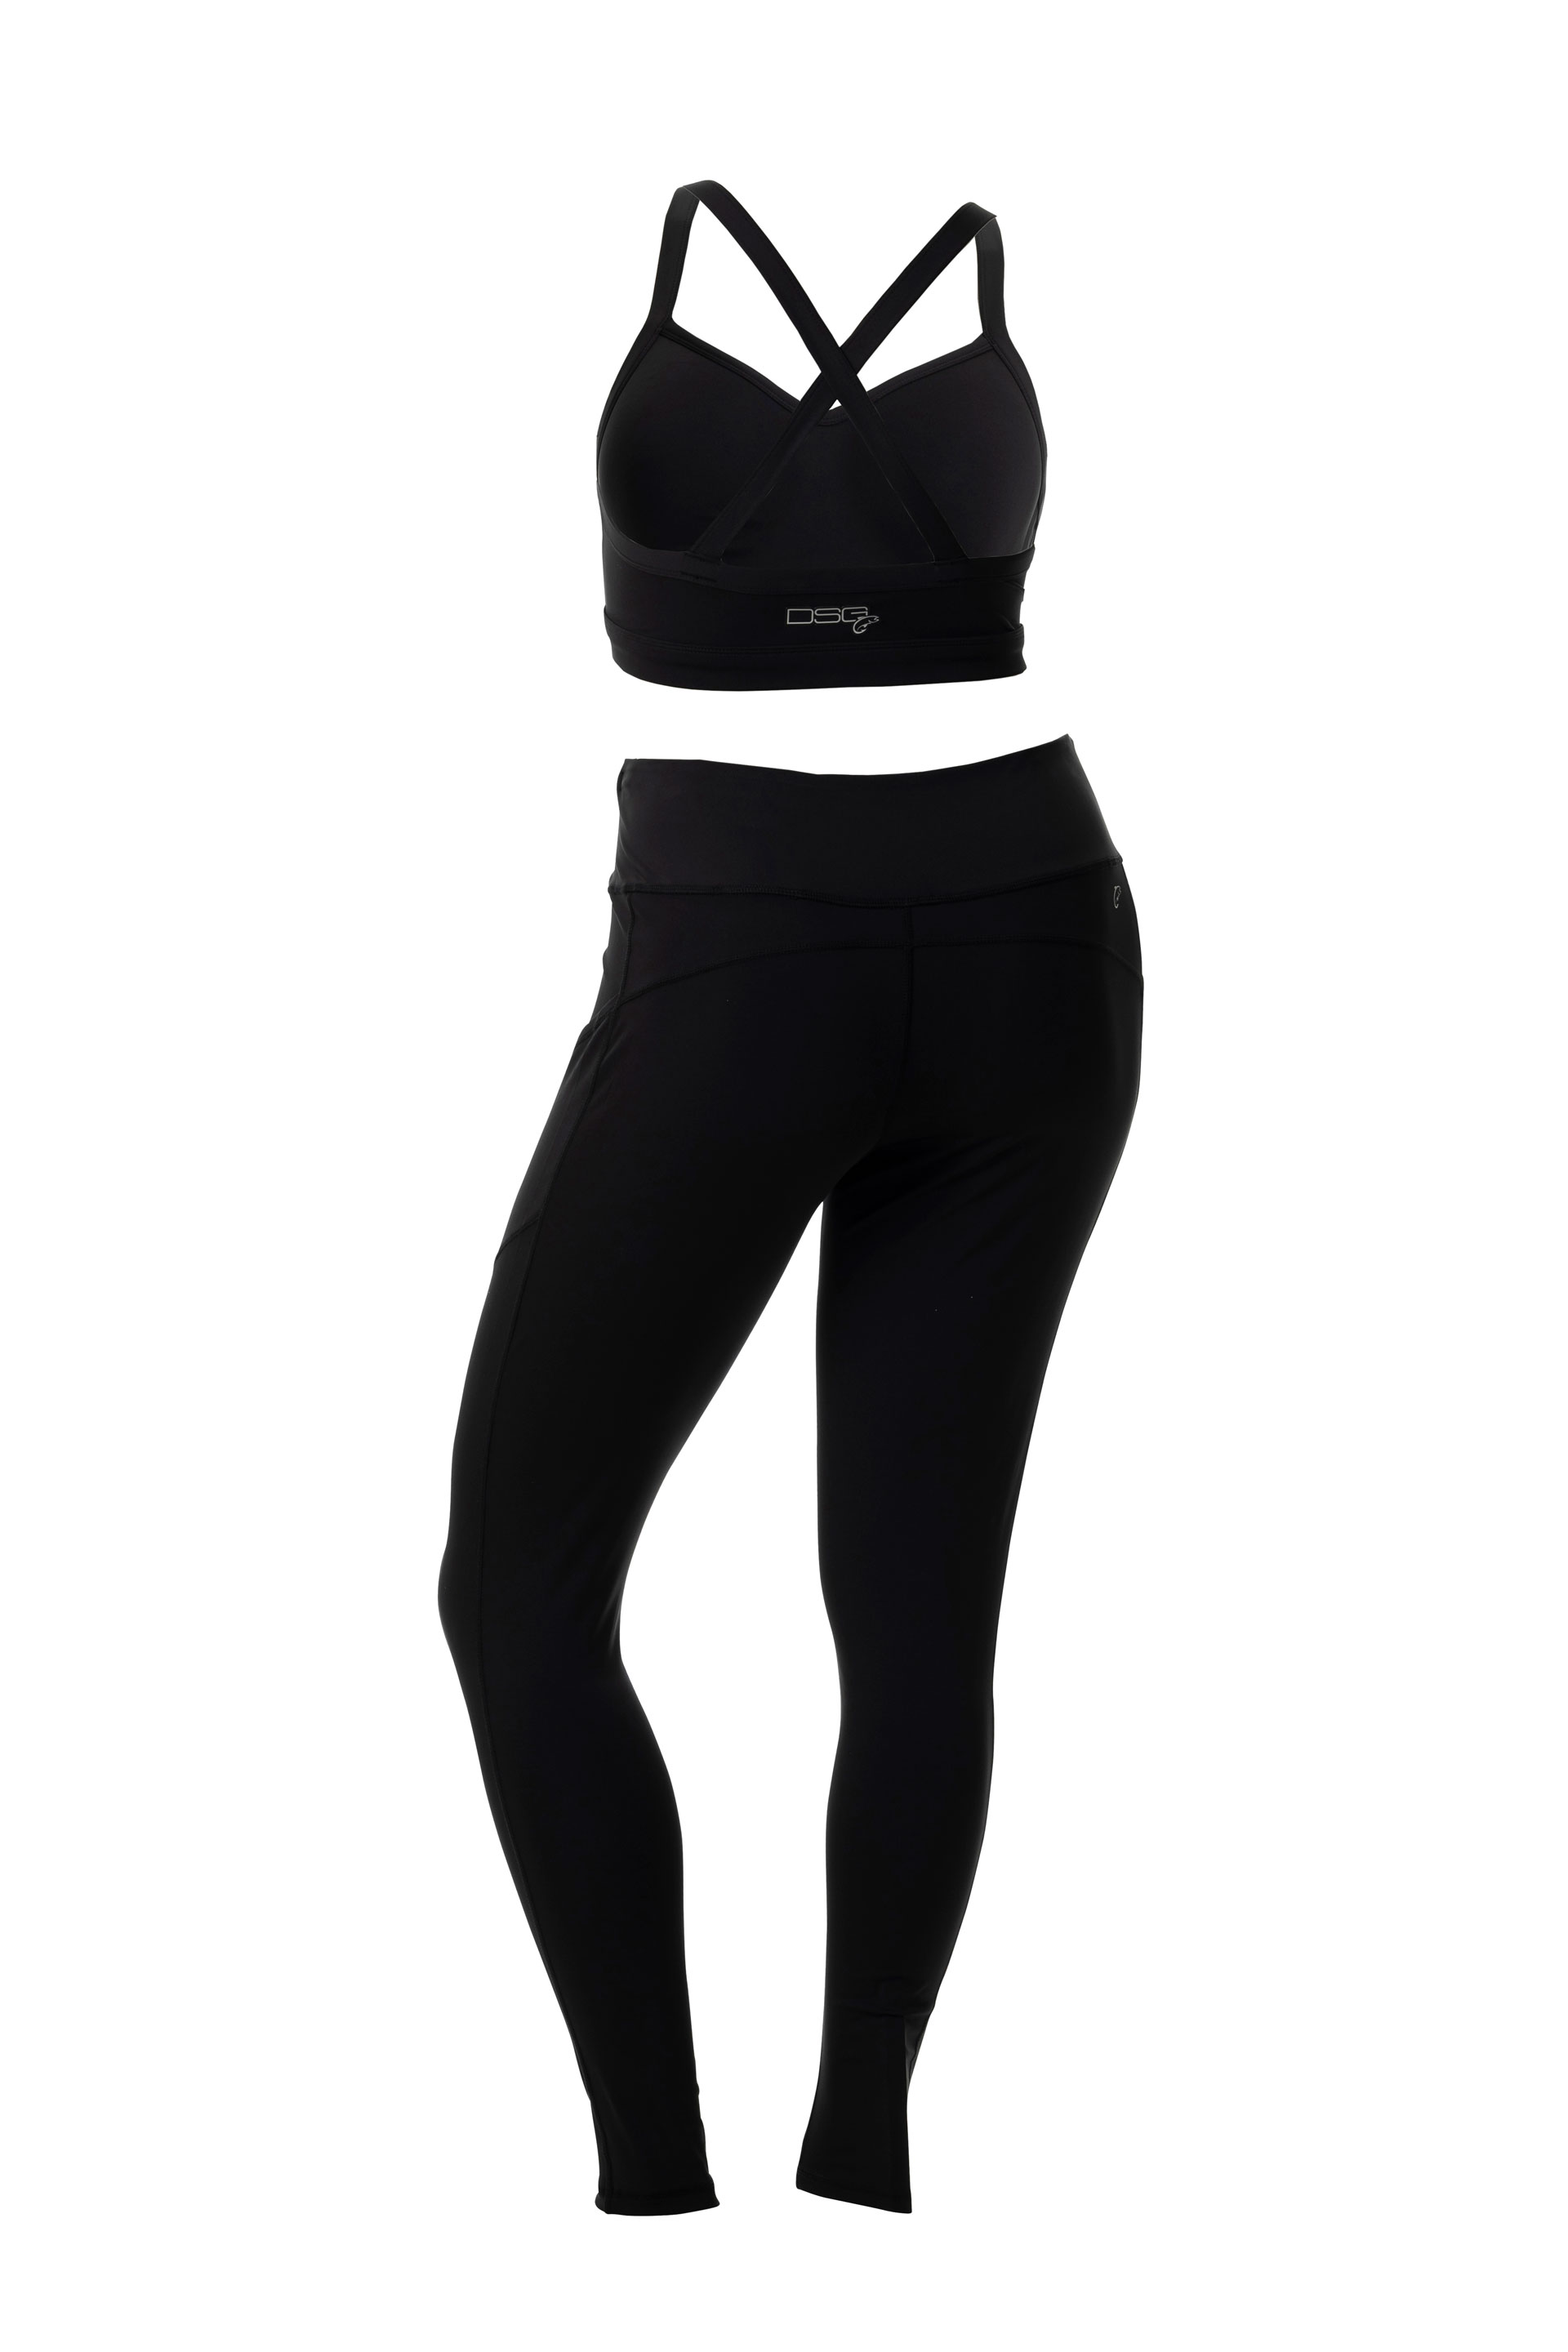 NWT DSG Women's Seamless Front Zip Sports Bra Size S Space White/Blk $30  P137